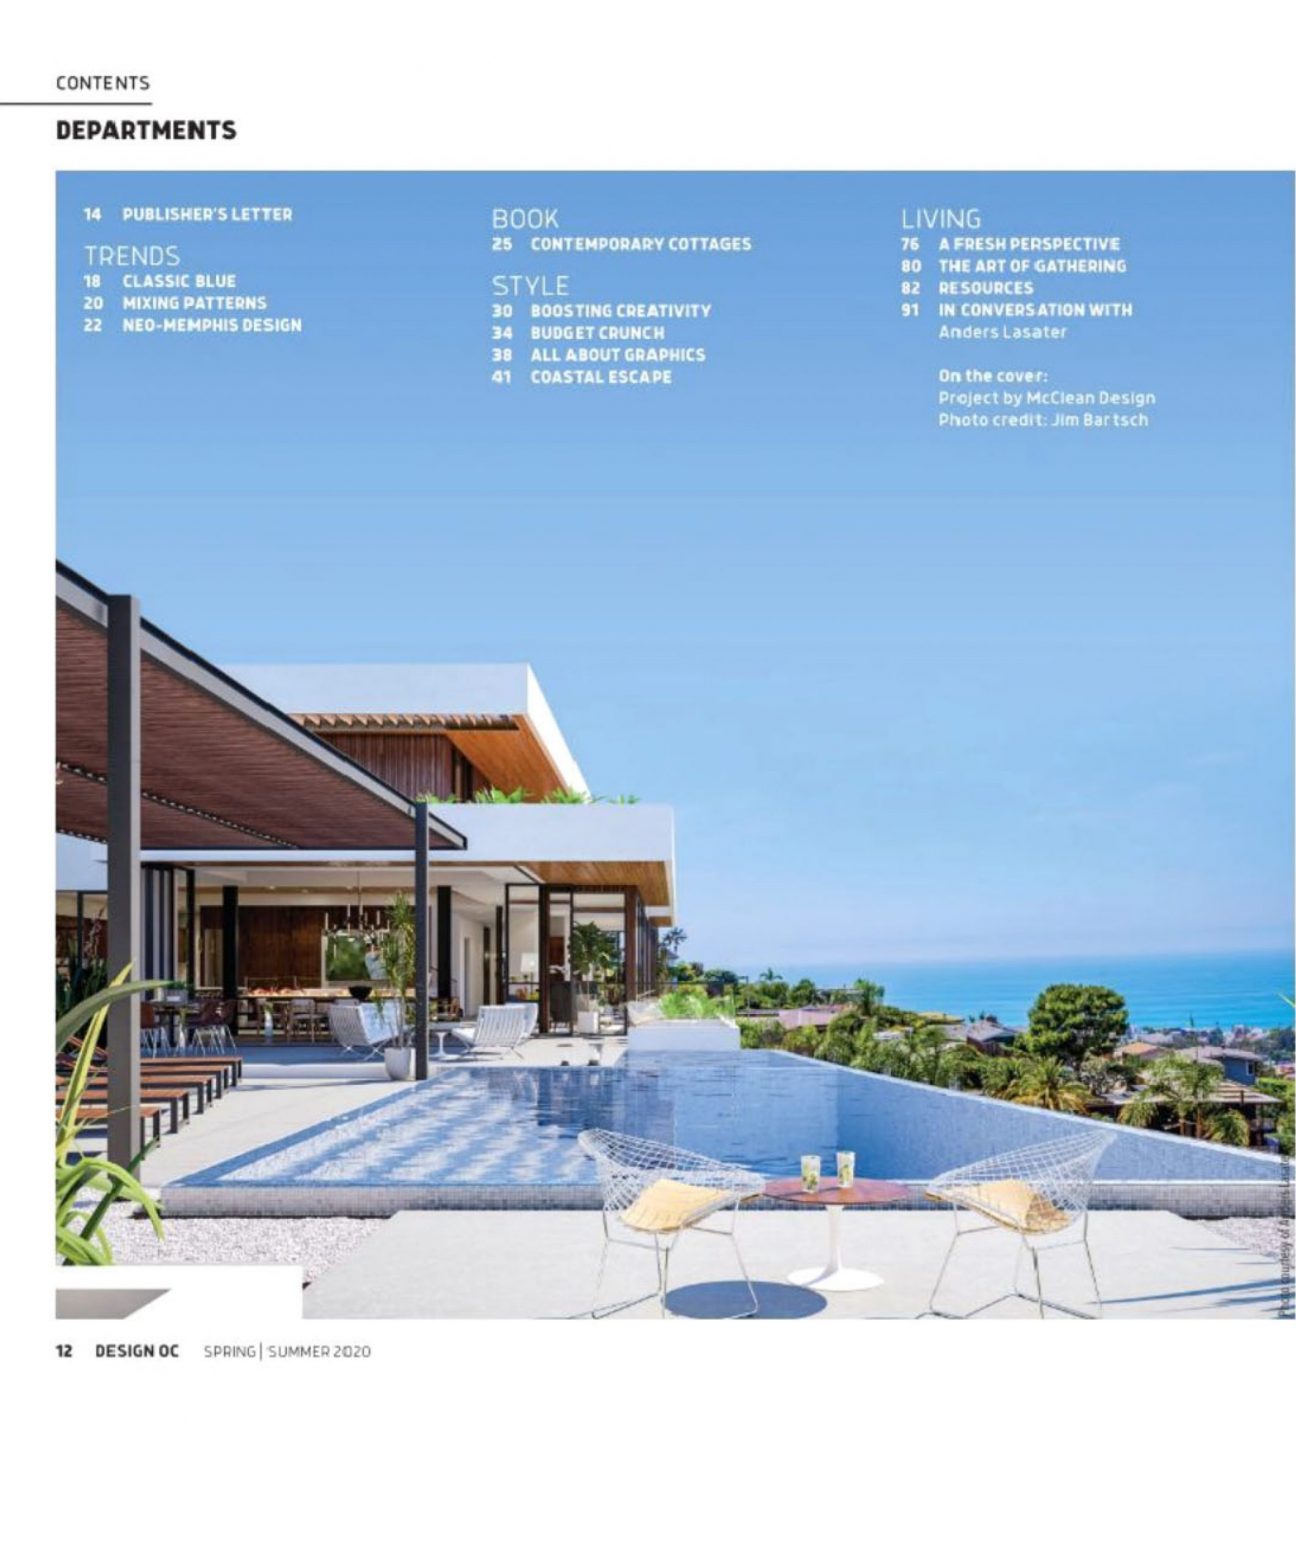 designoc-design-and-decor-magazine-springsummer-20202